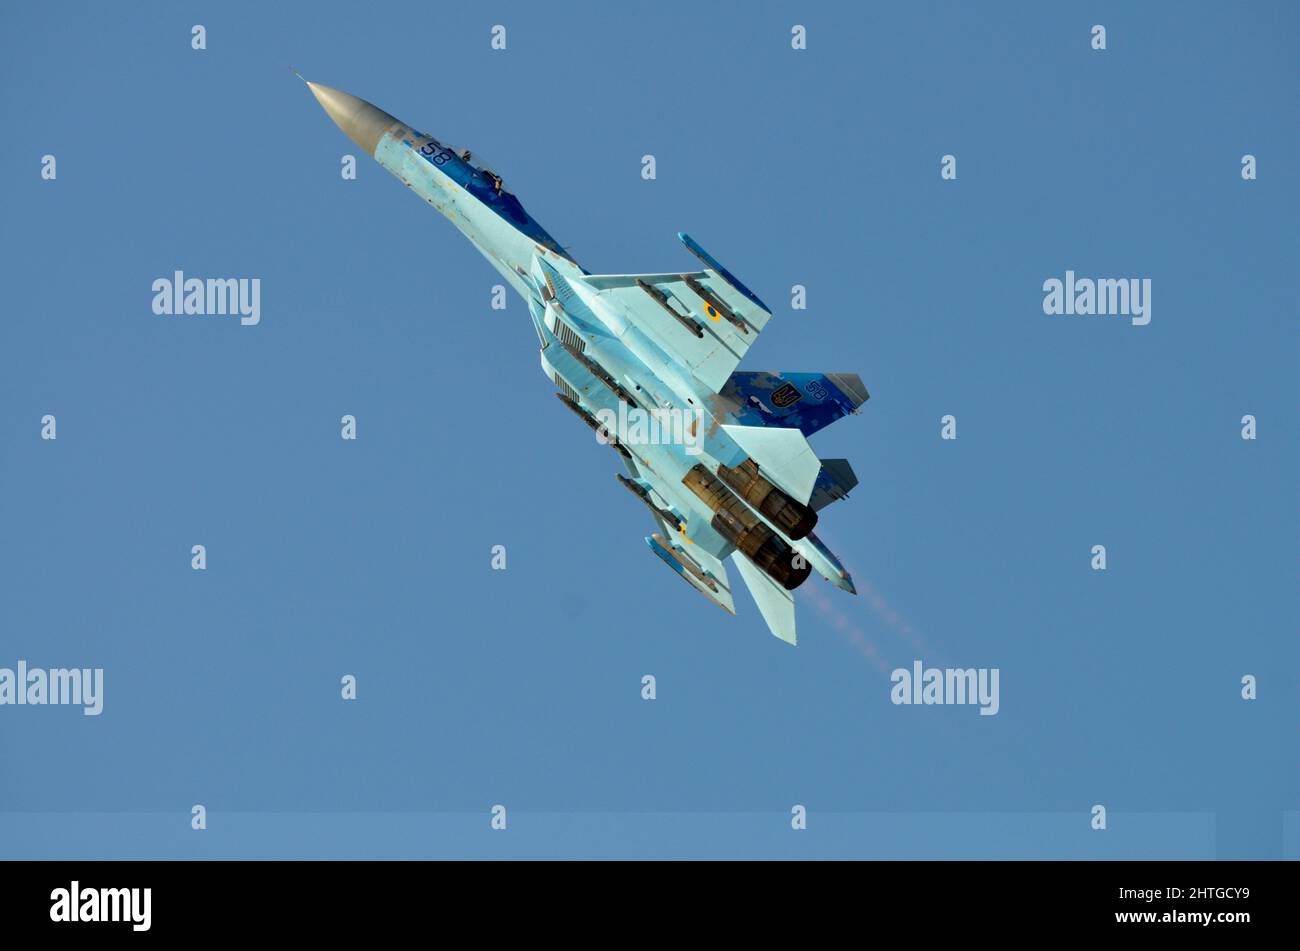 Ukrainian Air Force Sukhoi SU-27 Fighter Aircraft Stock Photo - Alamy